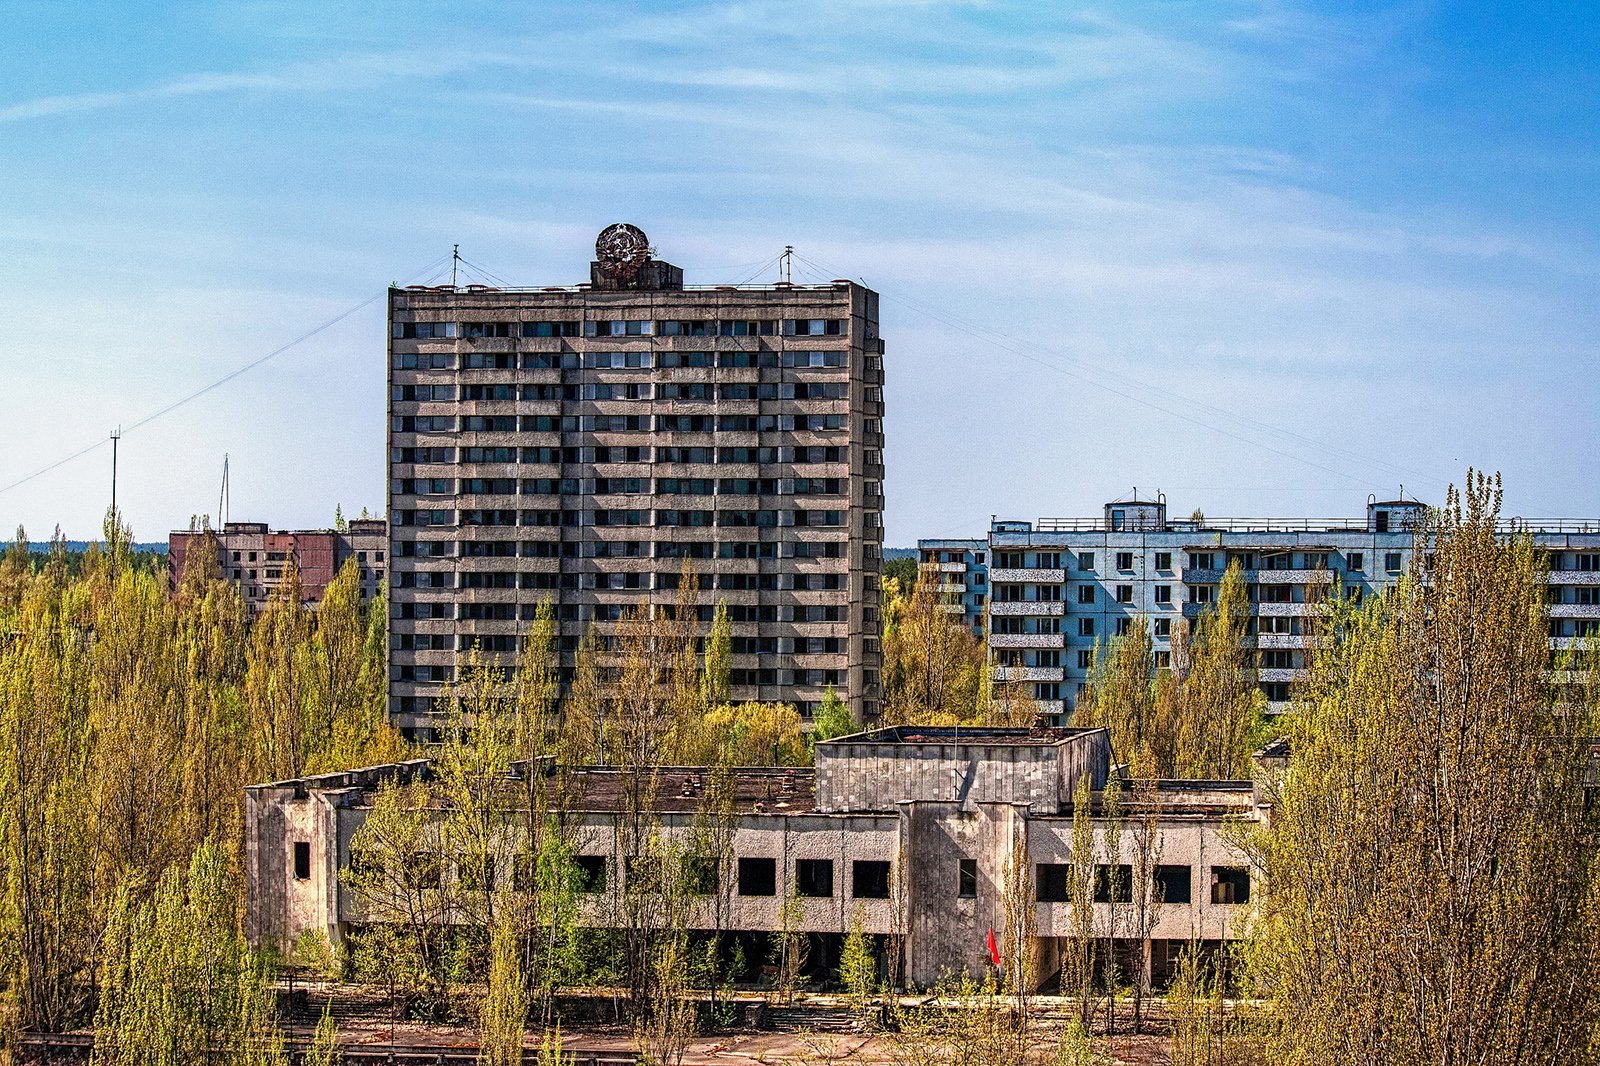 USSR 16-story building, Chernobyl